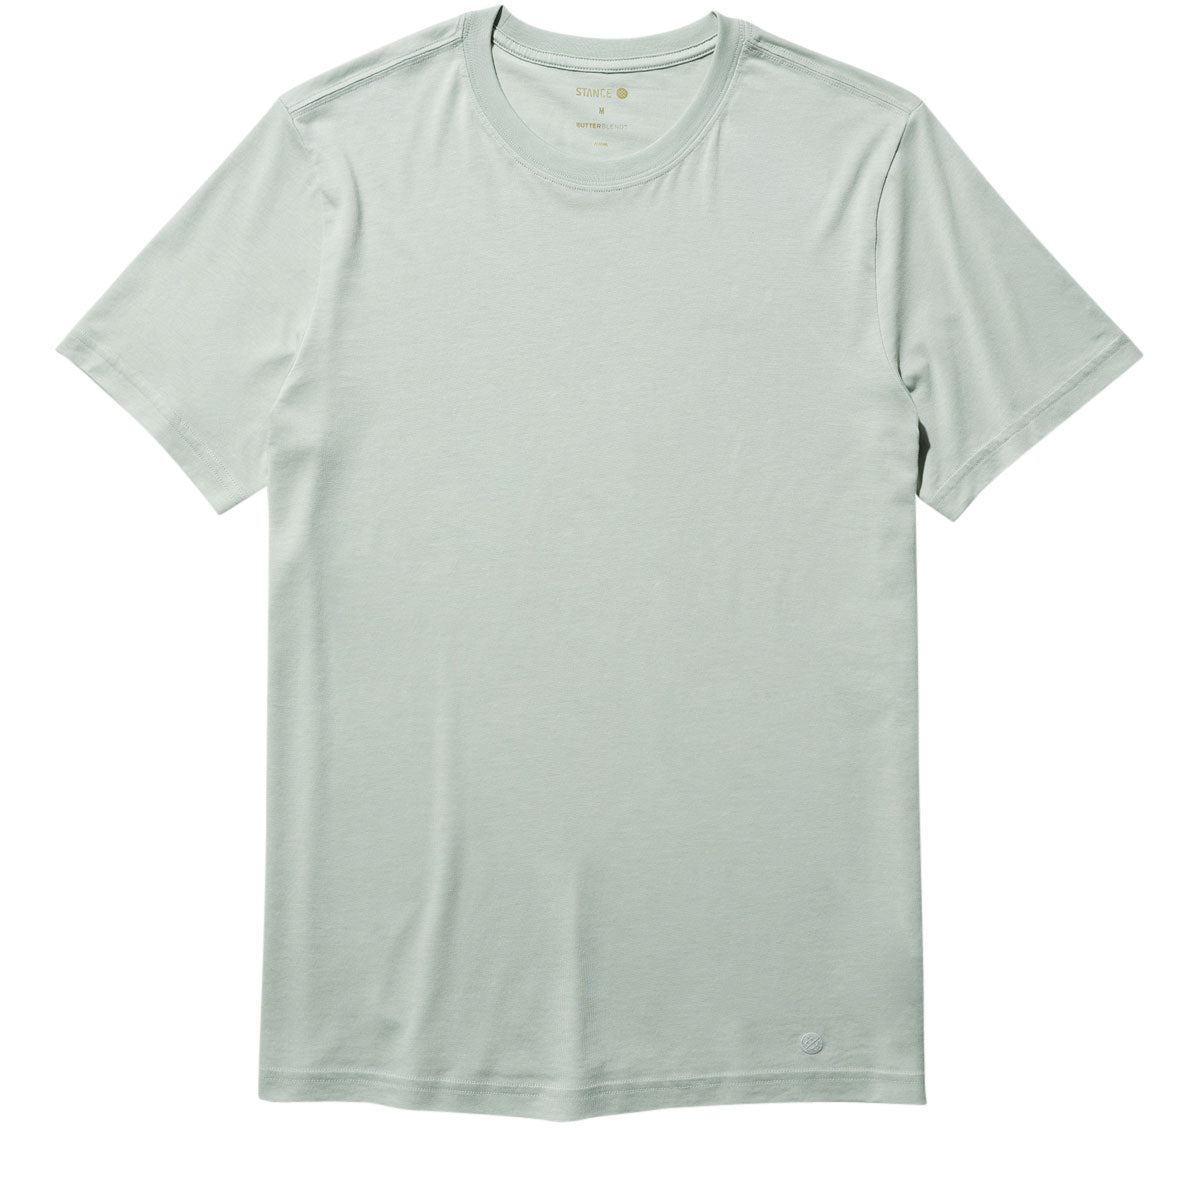 Stance Butter Blend T-Shirt - Grey/Blue image 1